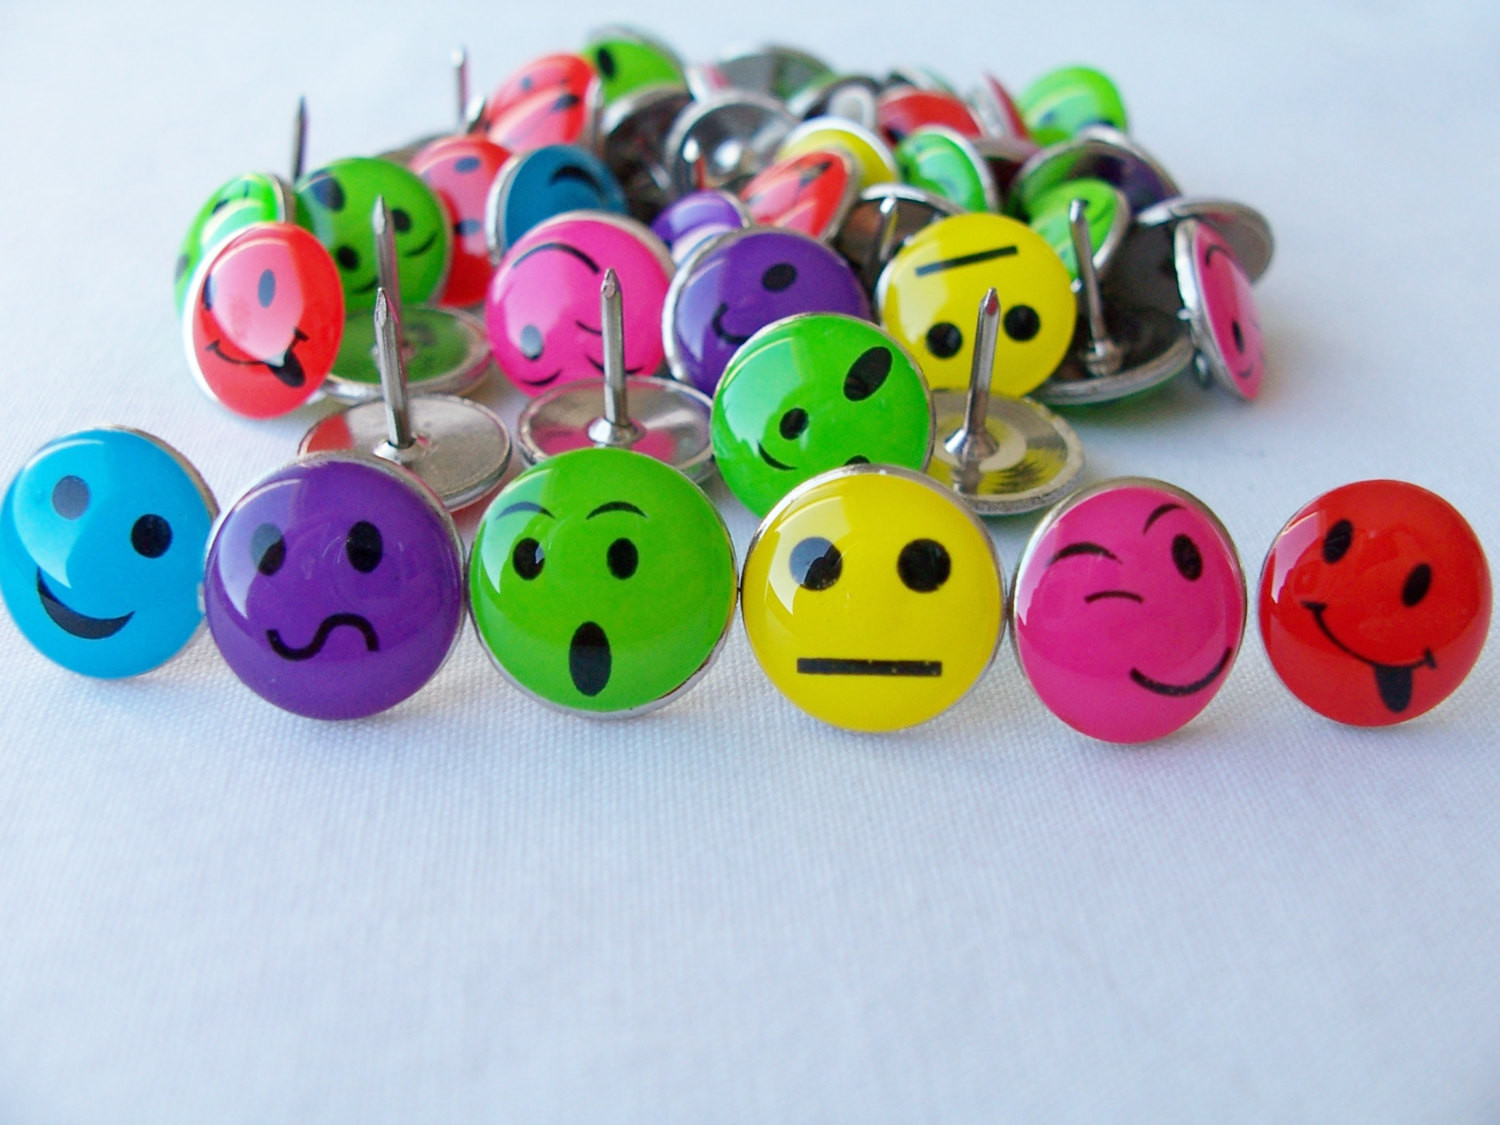 Cute Pins
 50 Cute faces metal push pins bright colourful thumb tacks